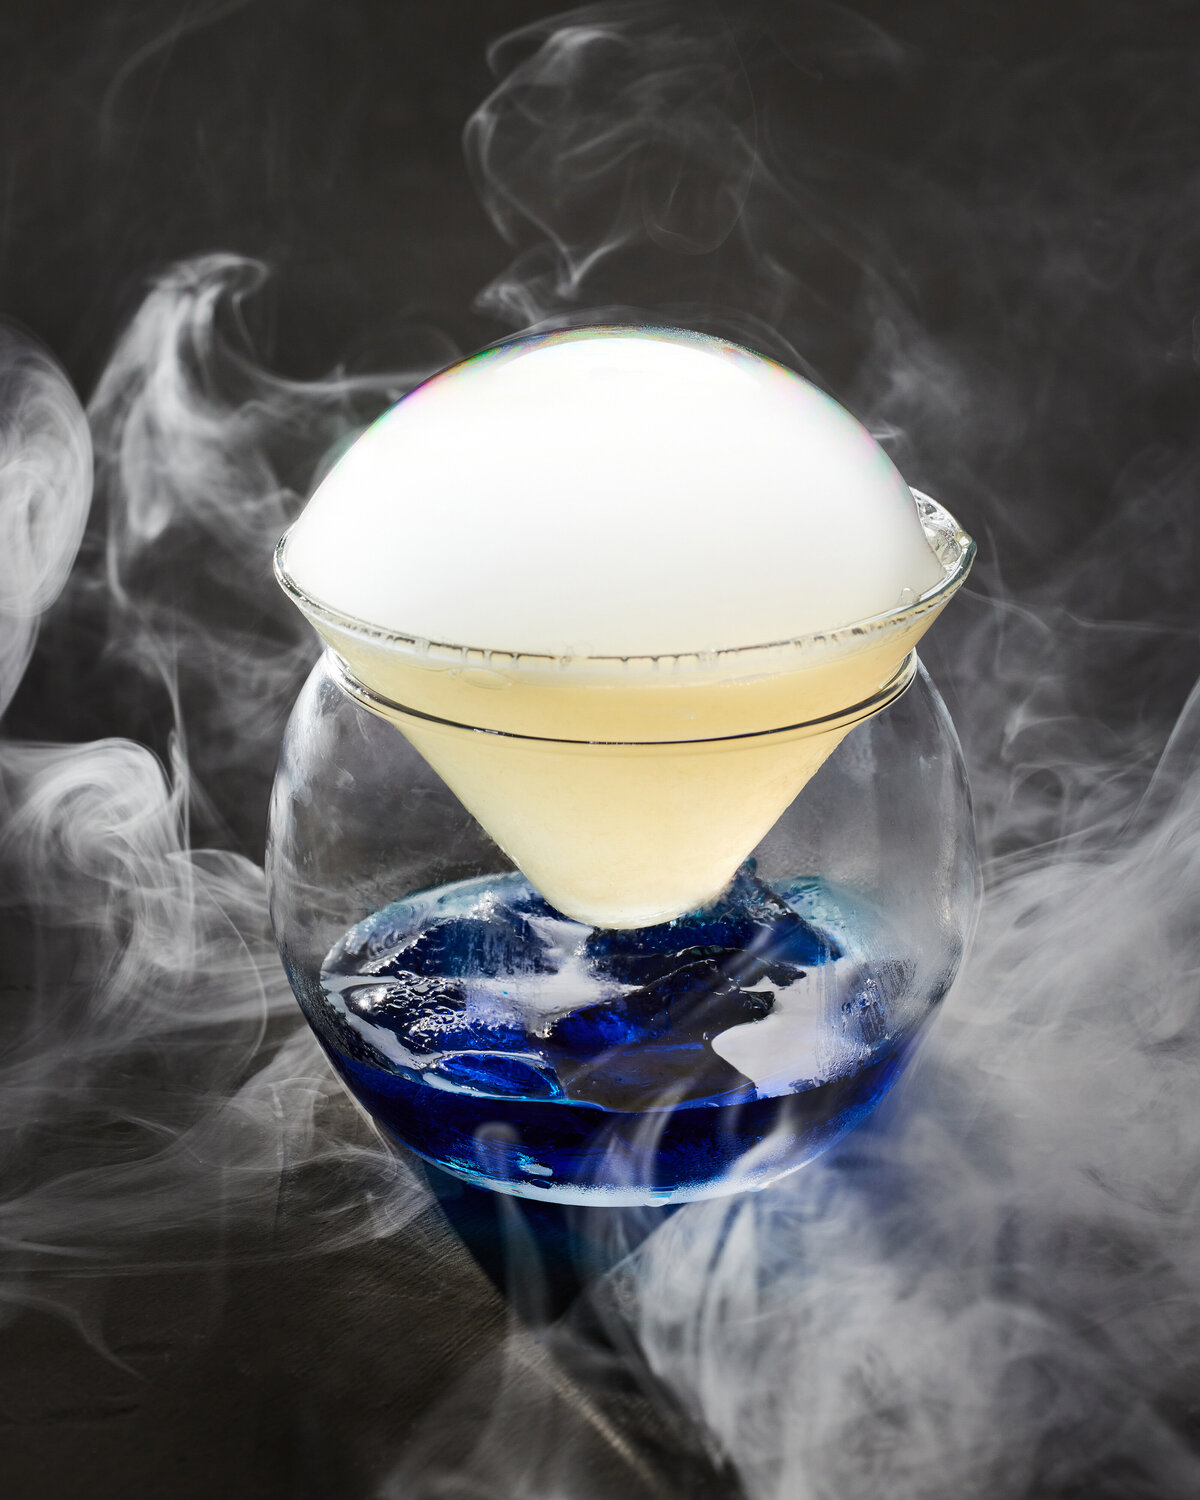 A smoking cocktail